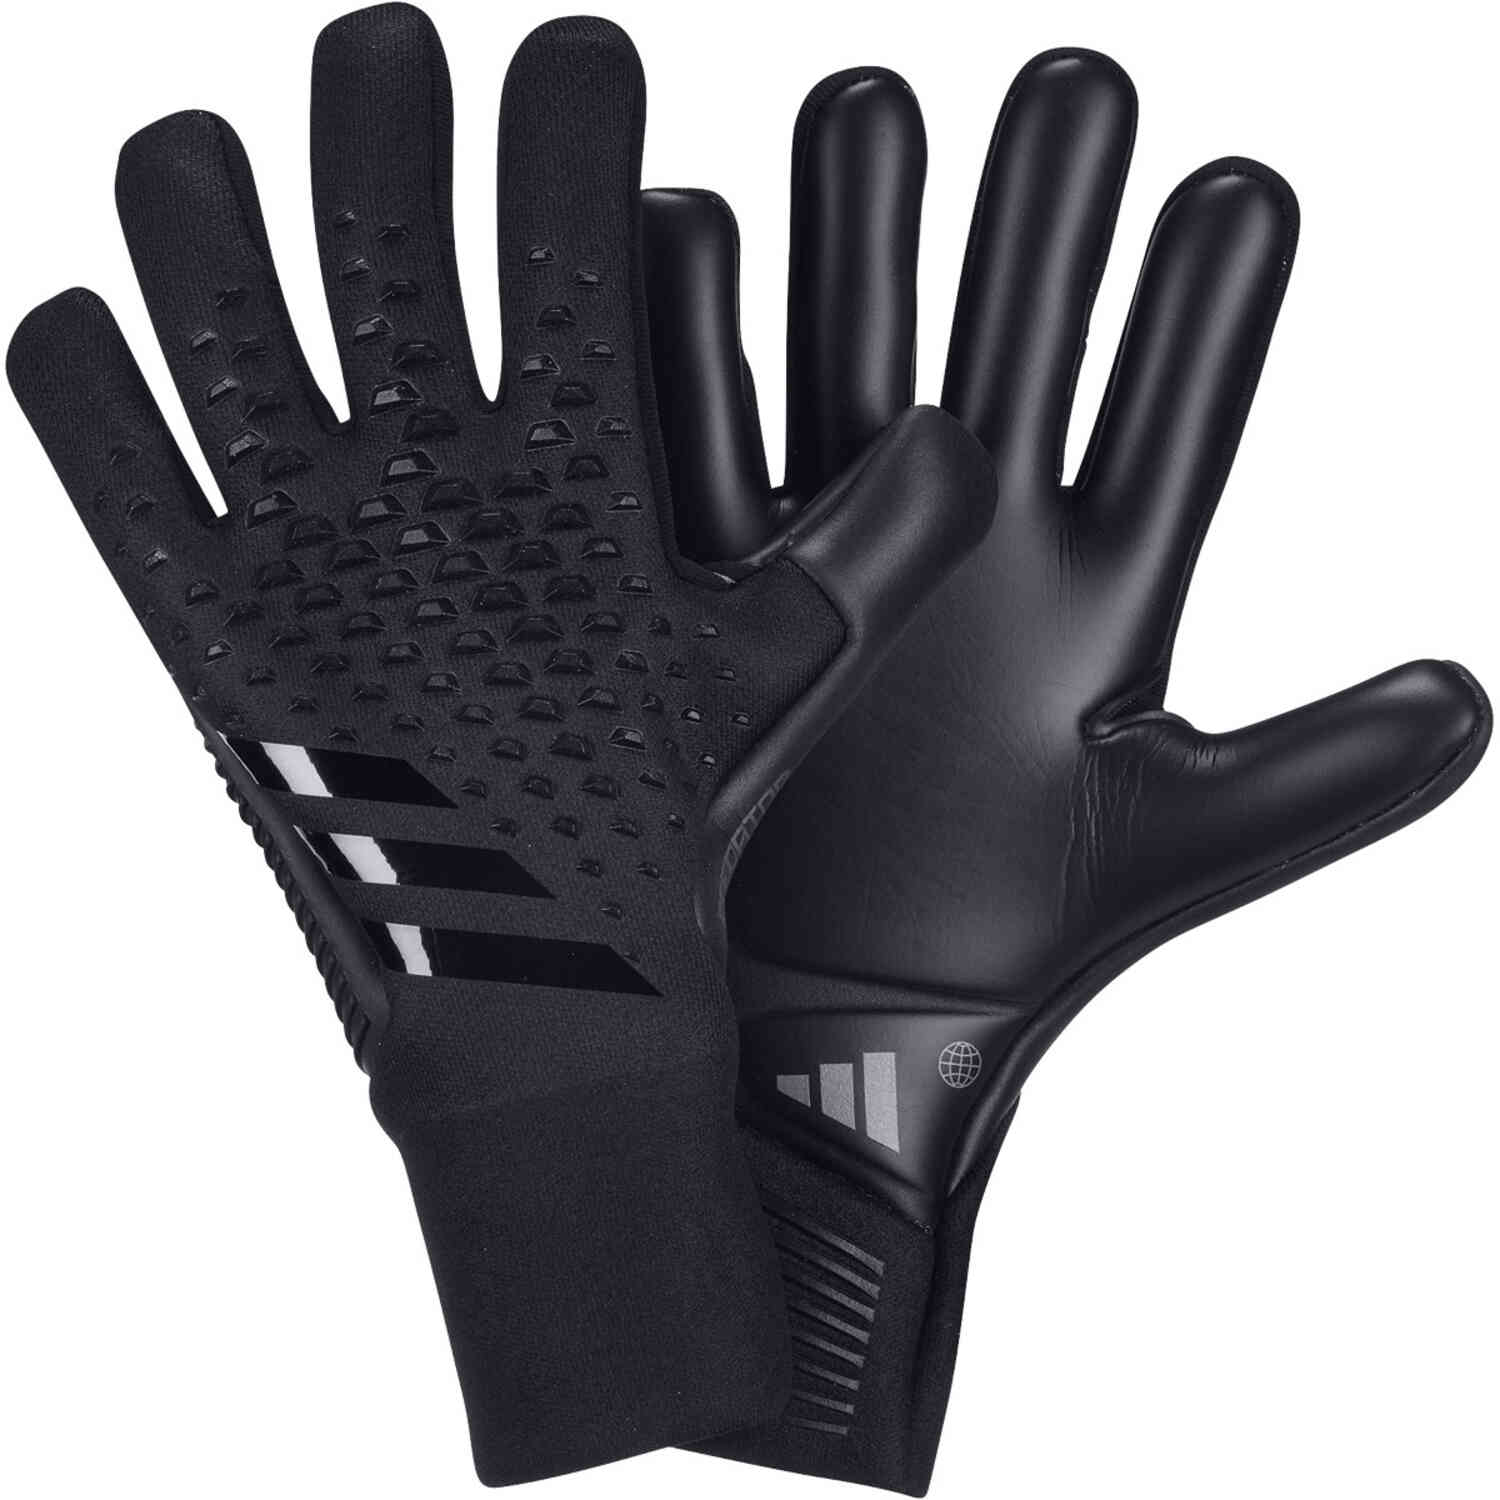 https://www.soccermaster.com/wp-content/uploads/hn3347_adidas_predator_pro_gk_gloves_black_black_with_black_sm_01.jpg